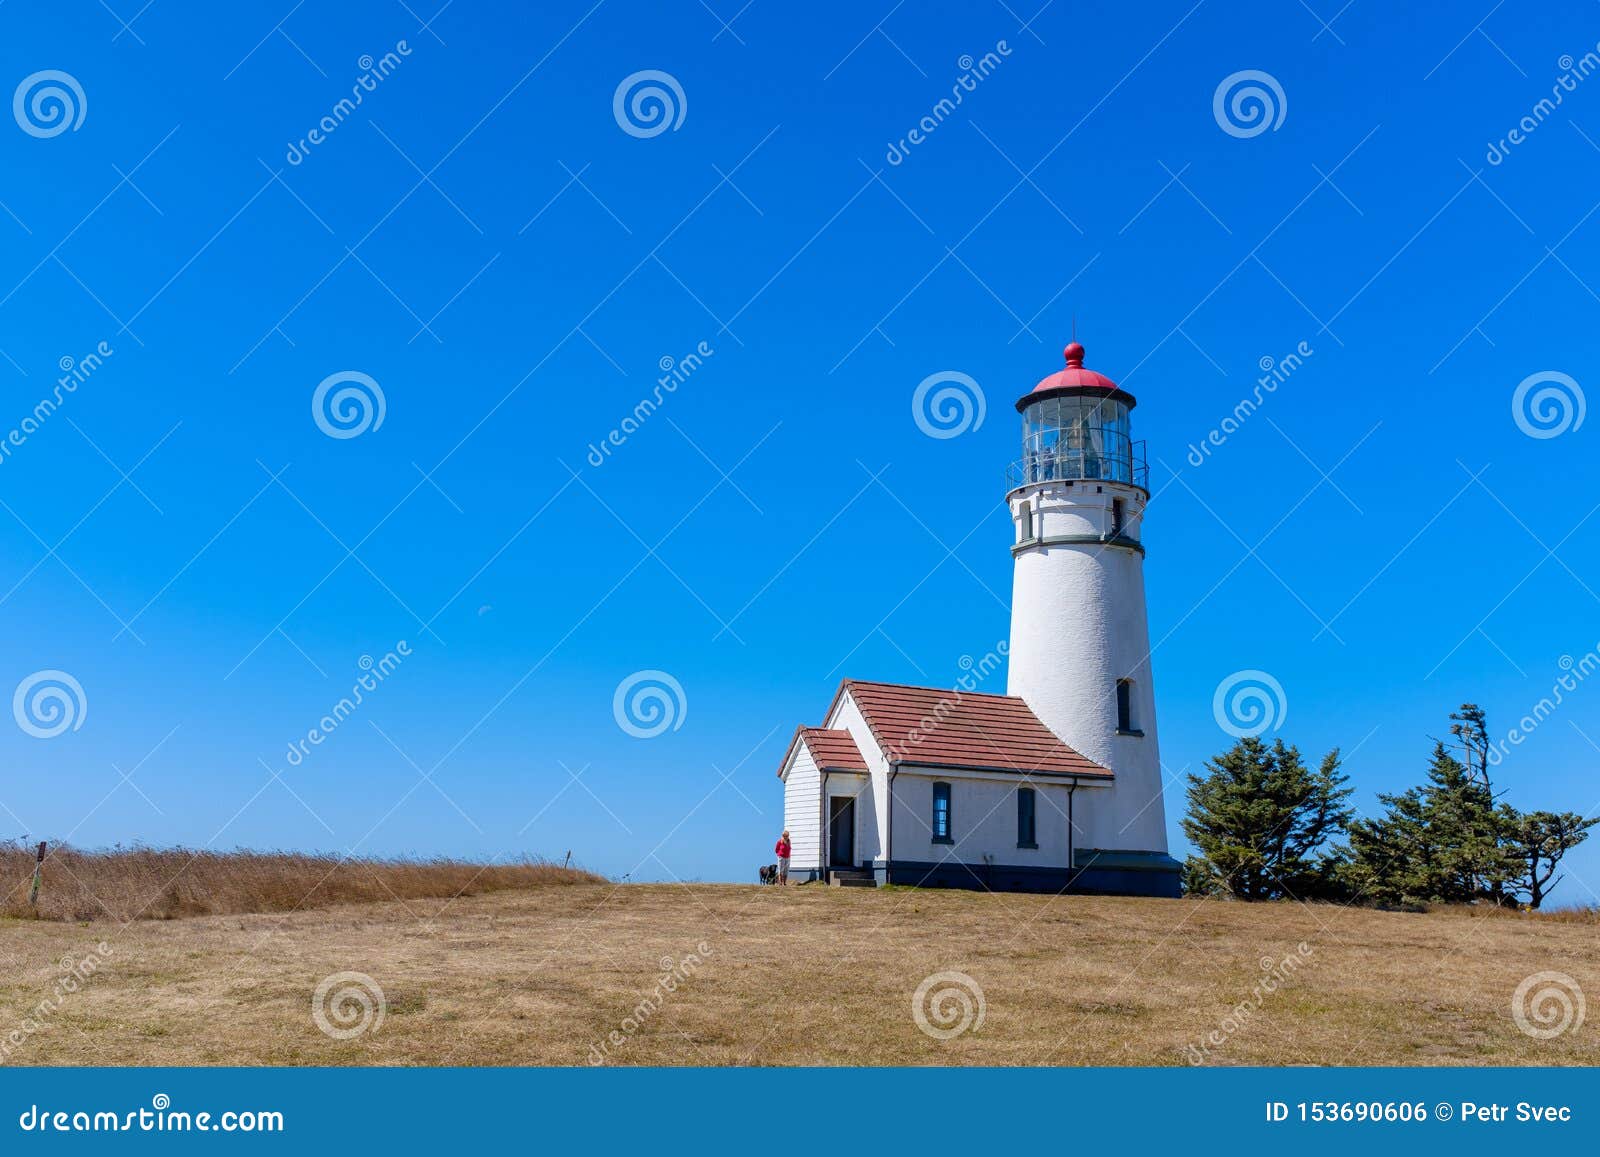 cape blanco lighthouse in oregon